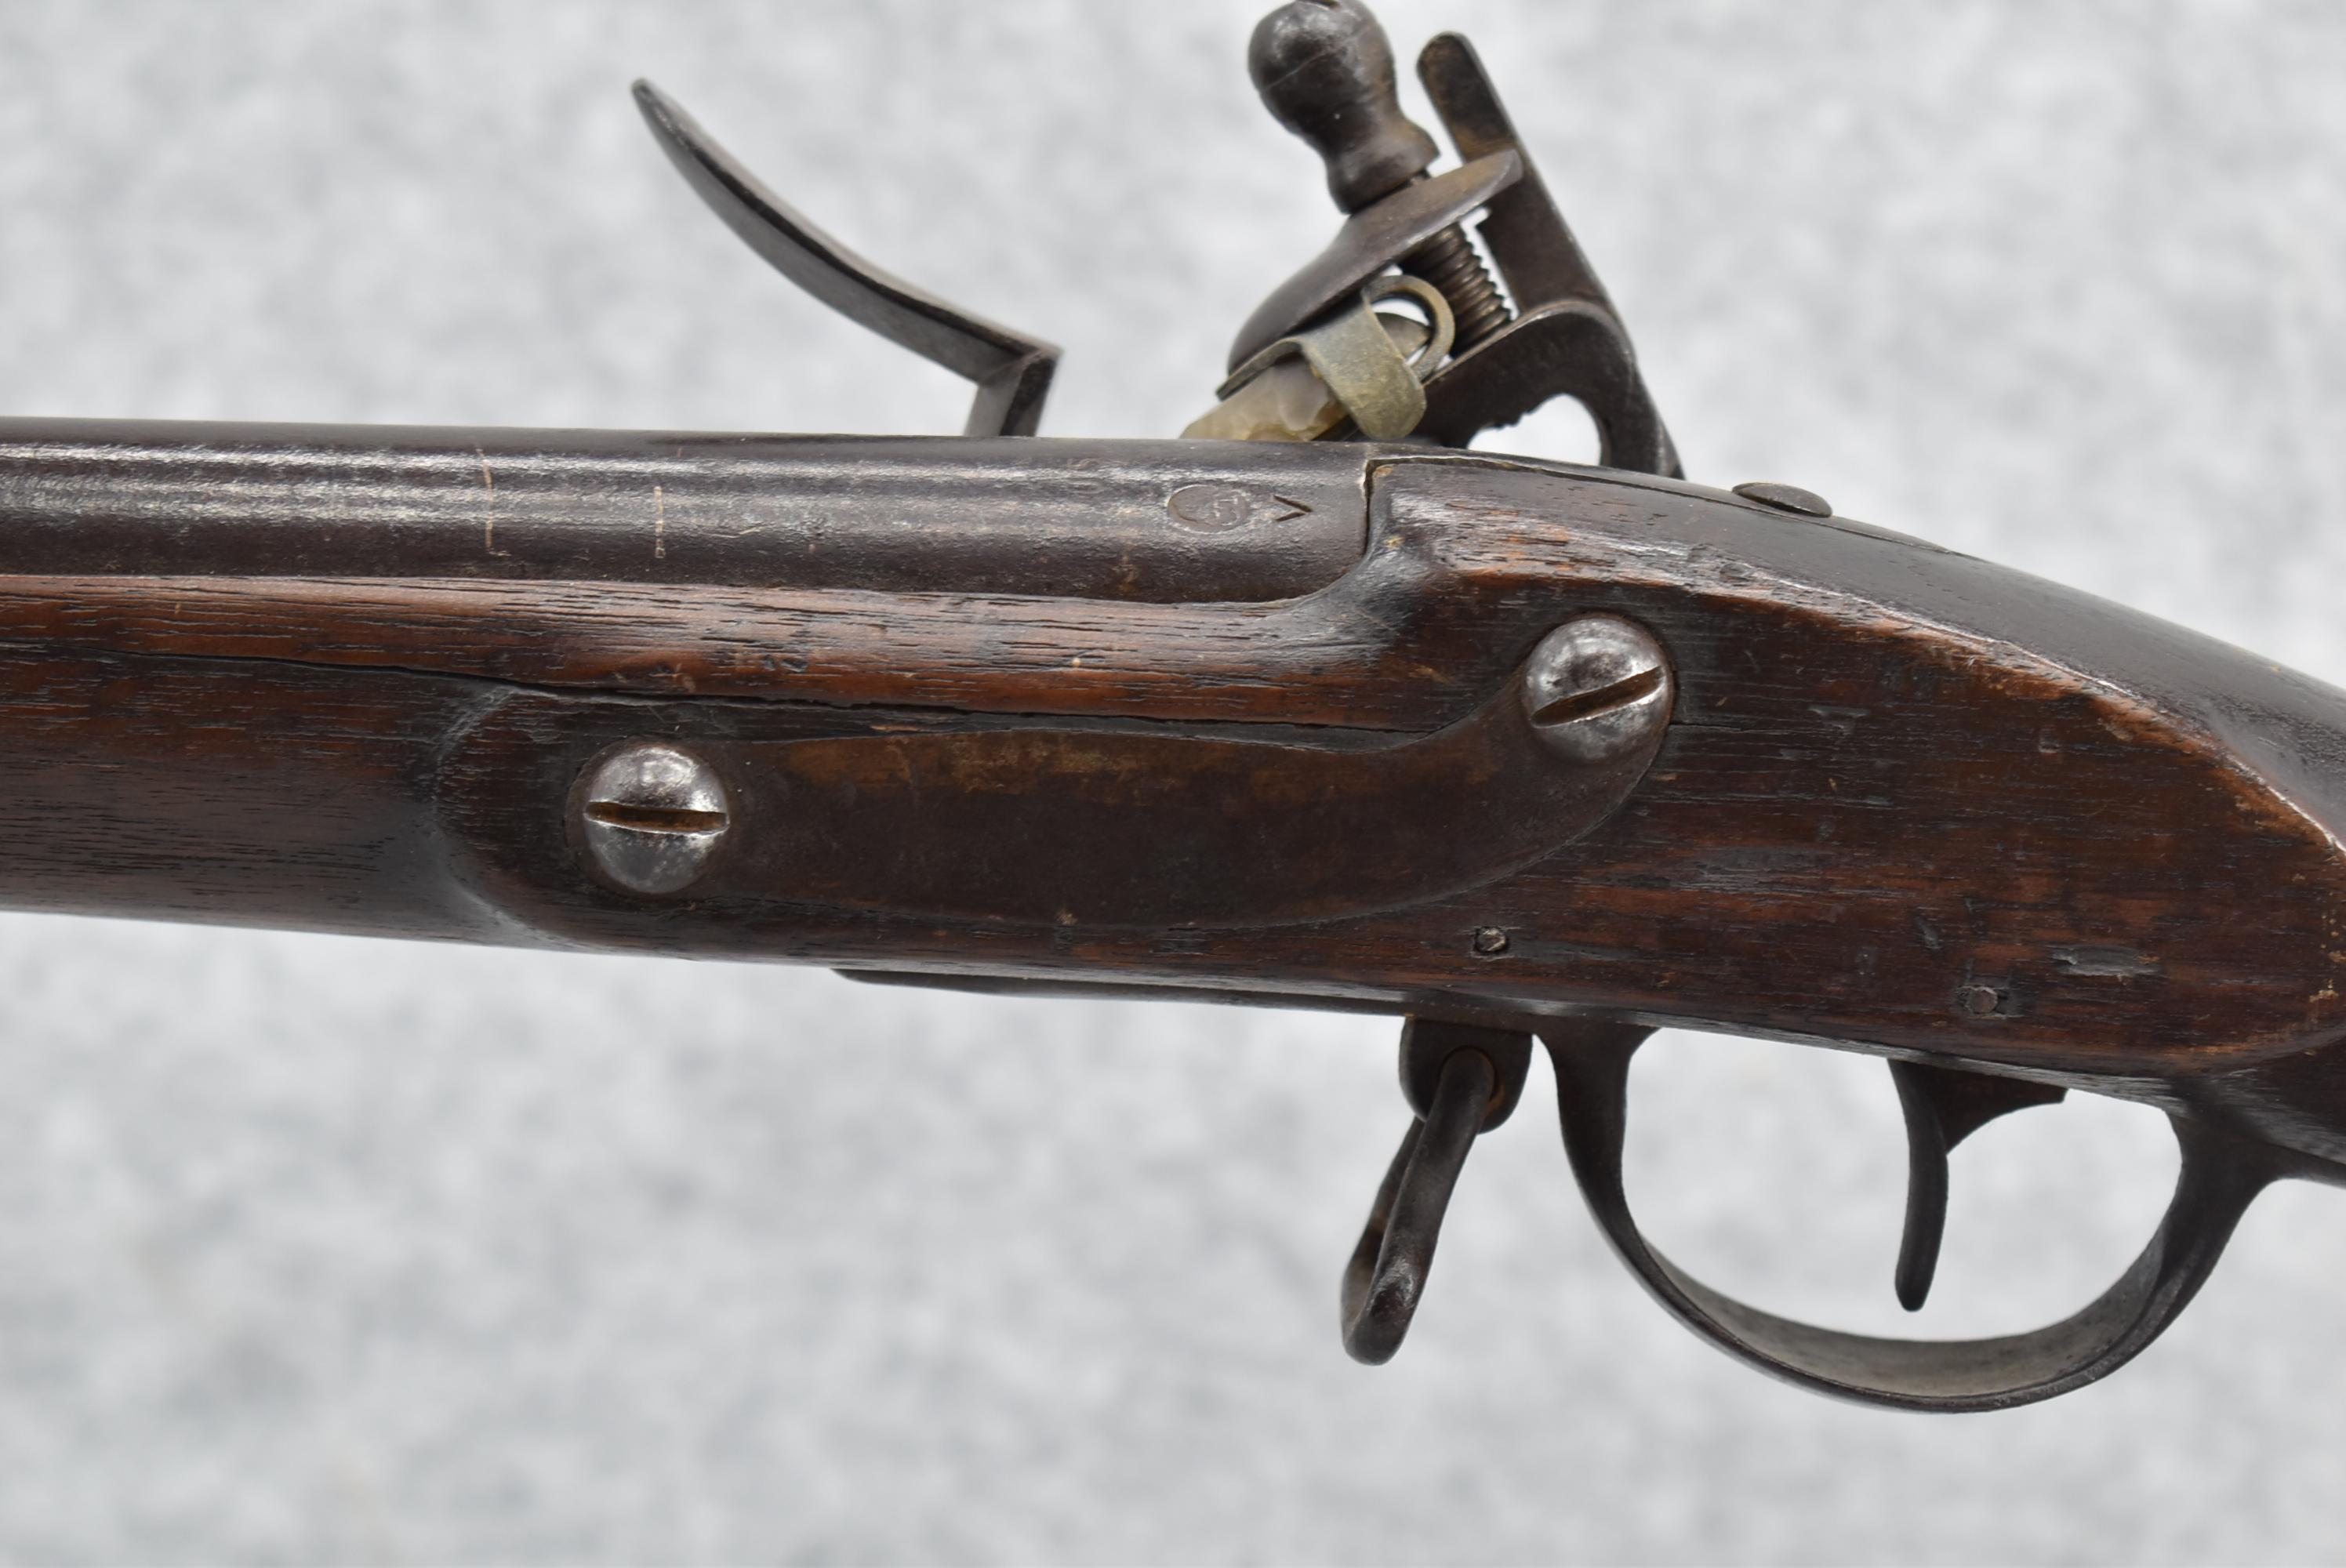 Thomas French – 1808 U.S. Contract Musket – 69 Cal. Flintlock Musket